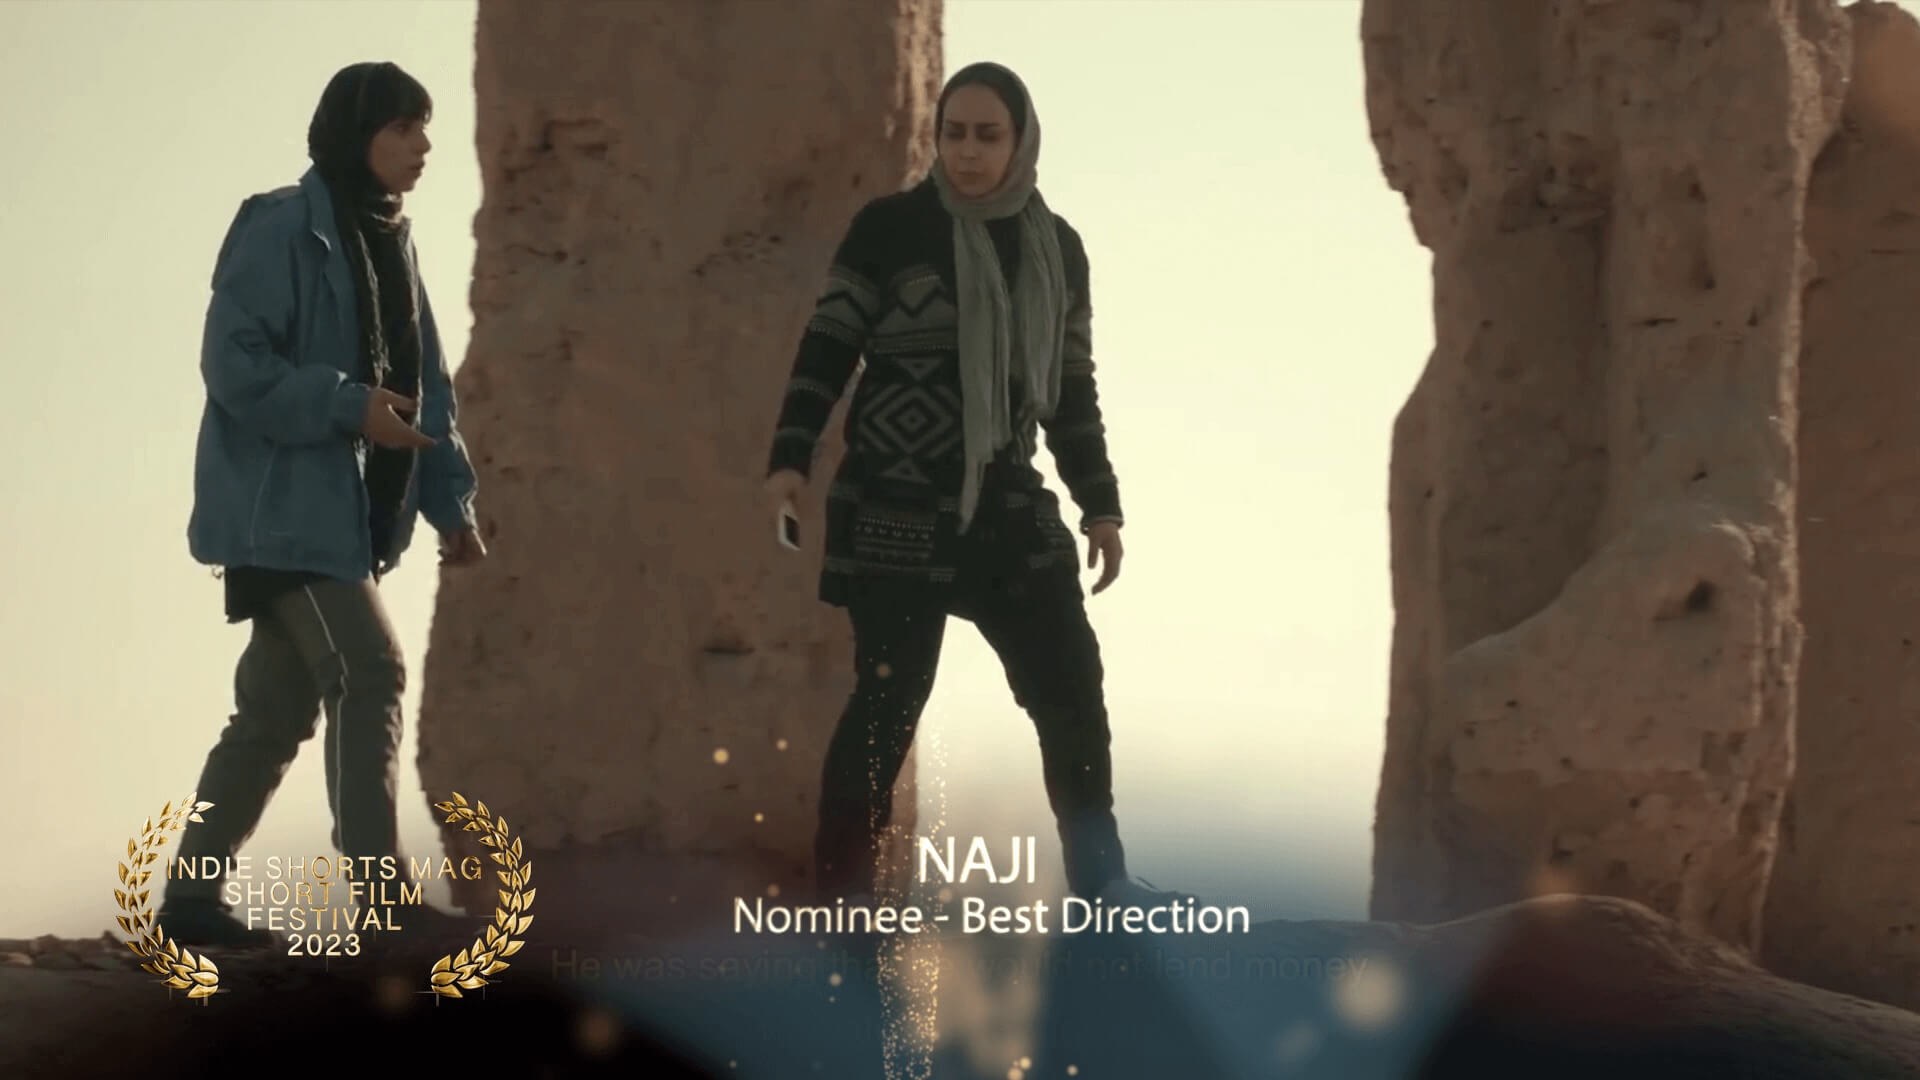 Indie Shorts Mag Short Film Festival - Best Direction - Nominee - Naji